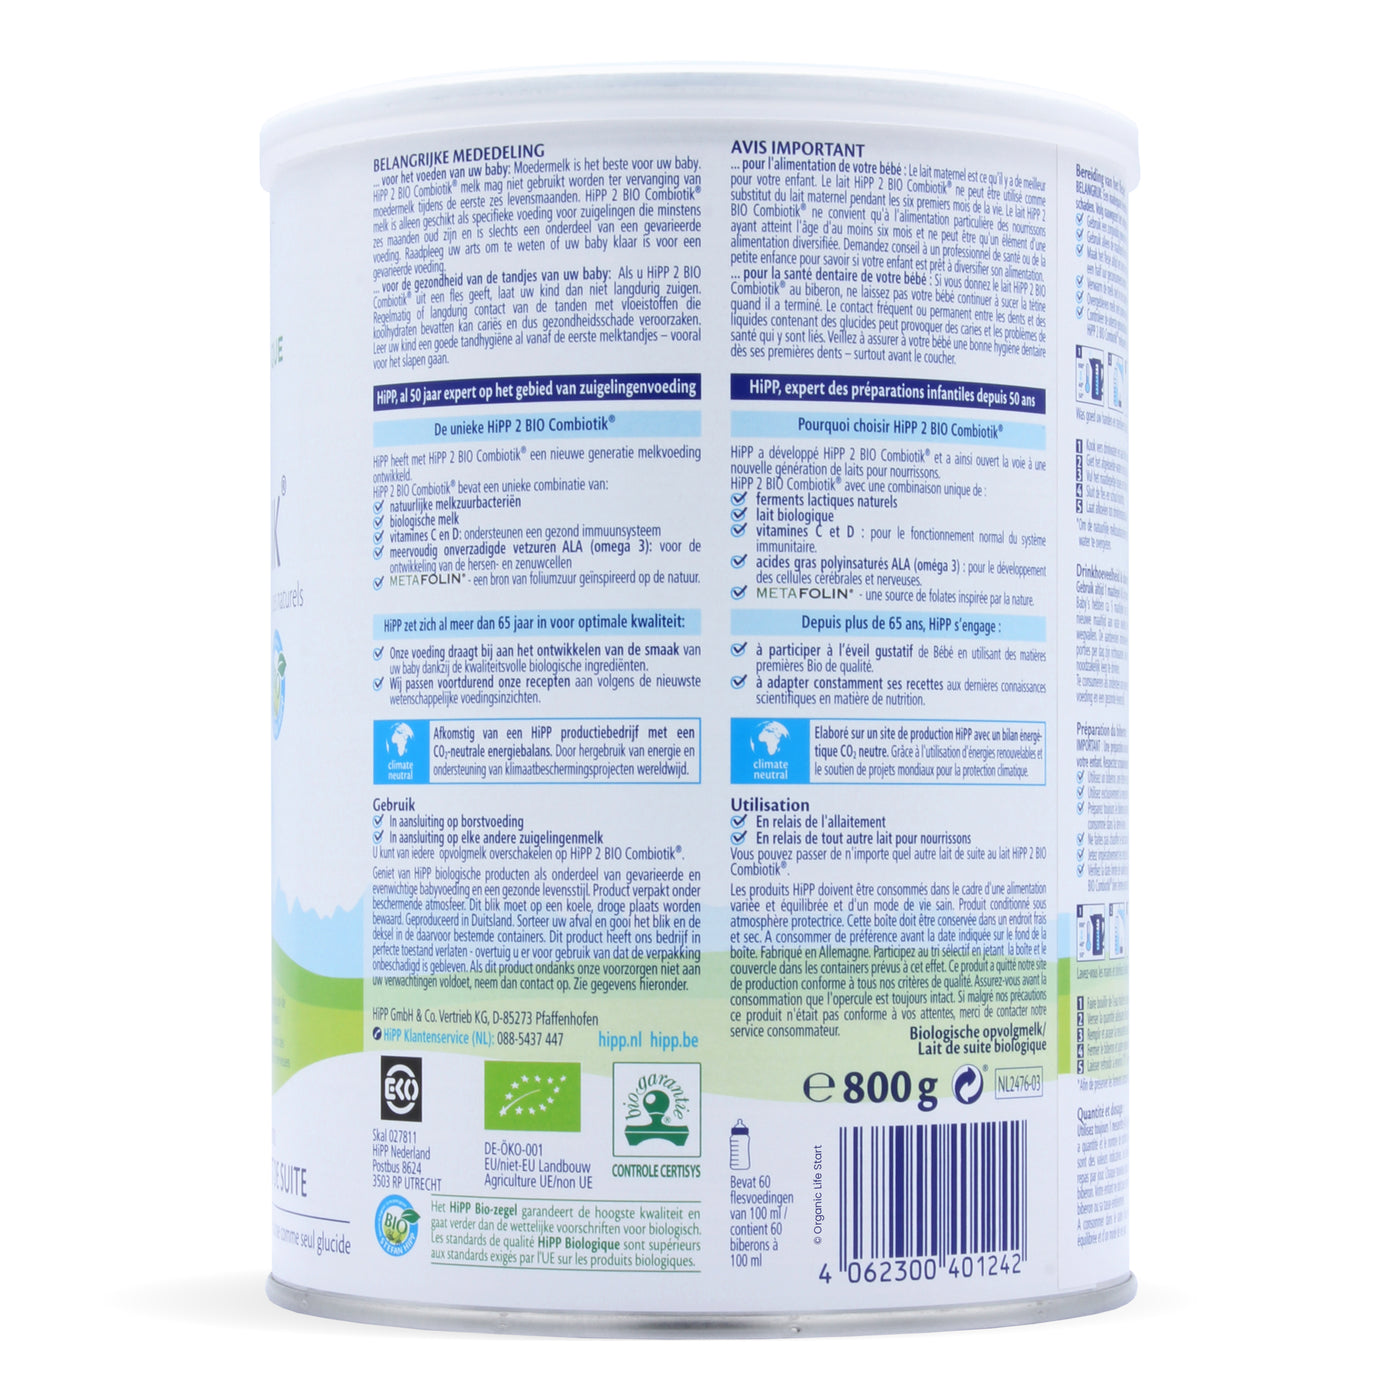 HiPP 2 Combiotic Organic Follow-on Milk, 350gr